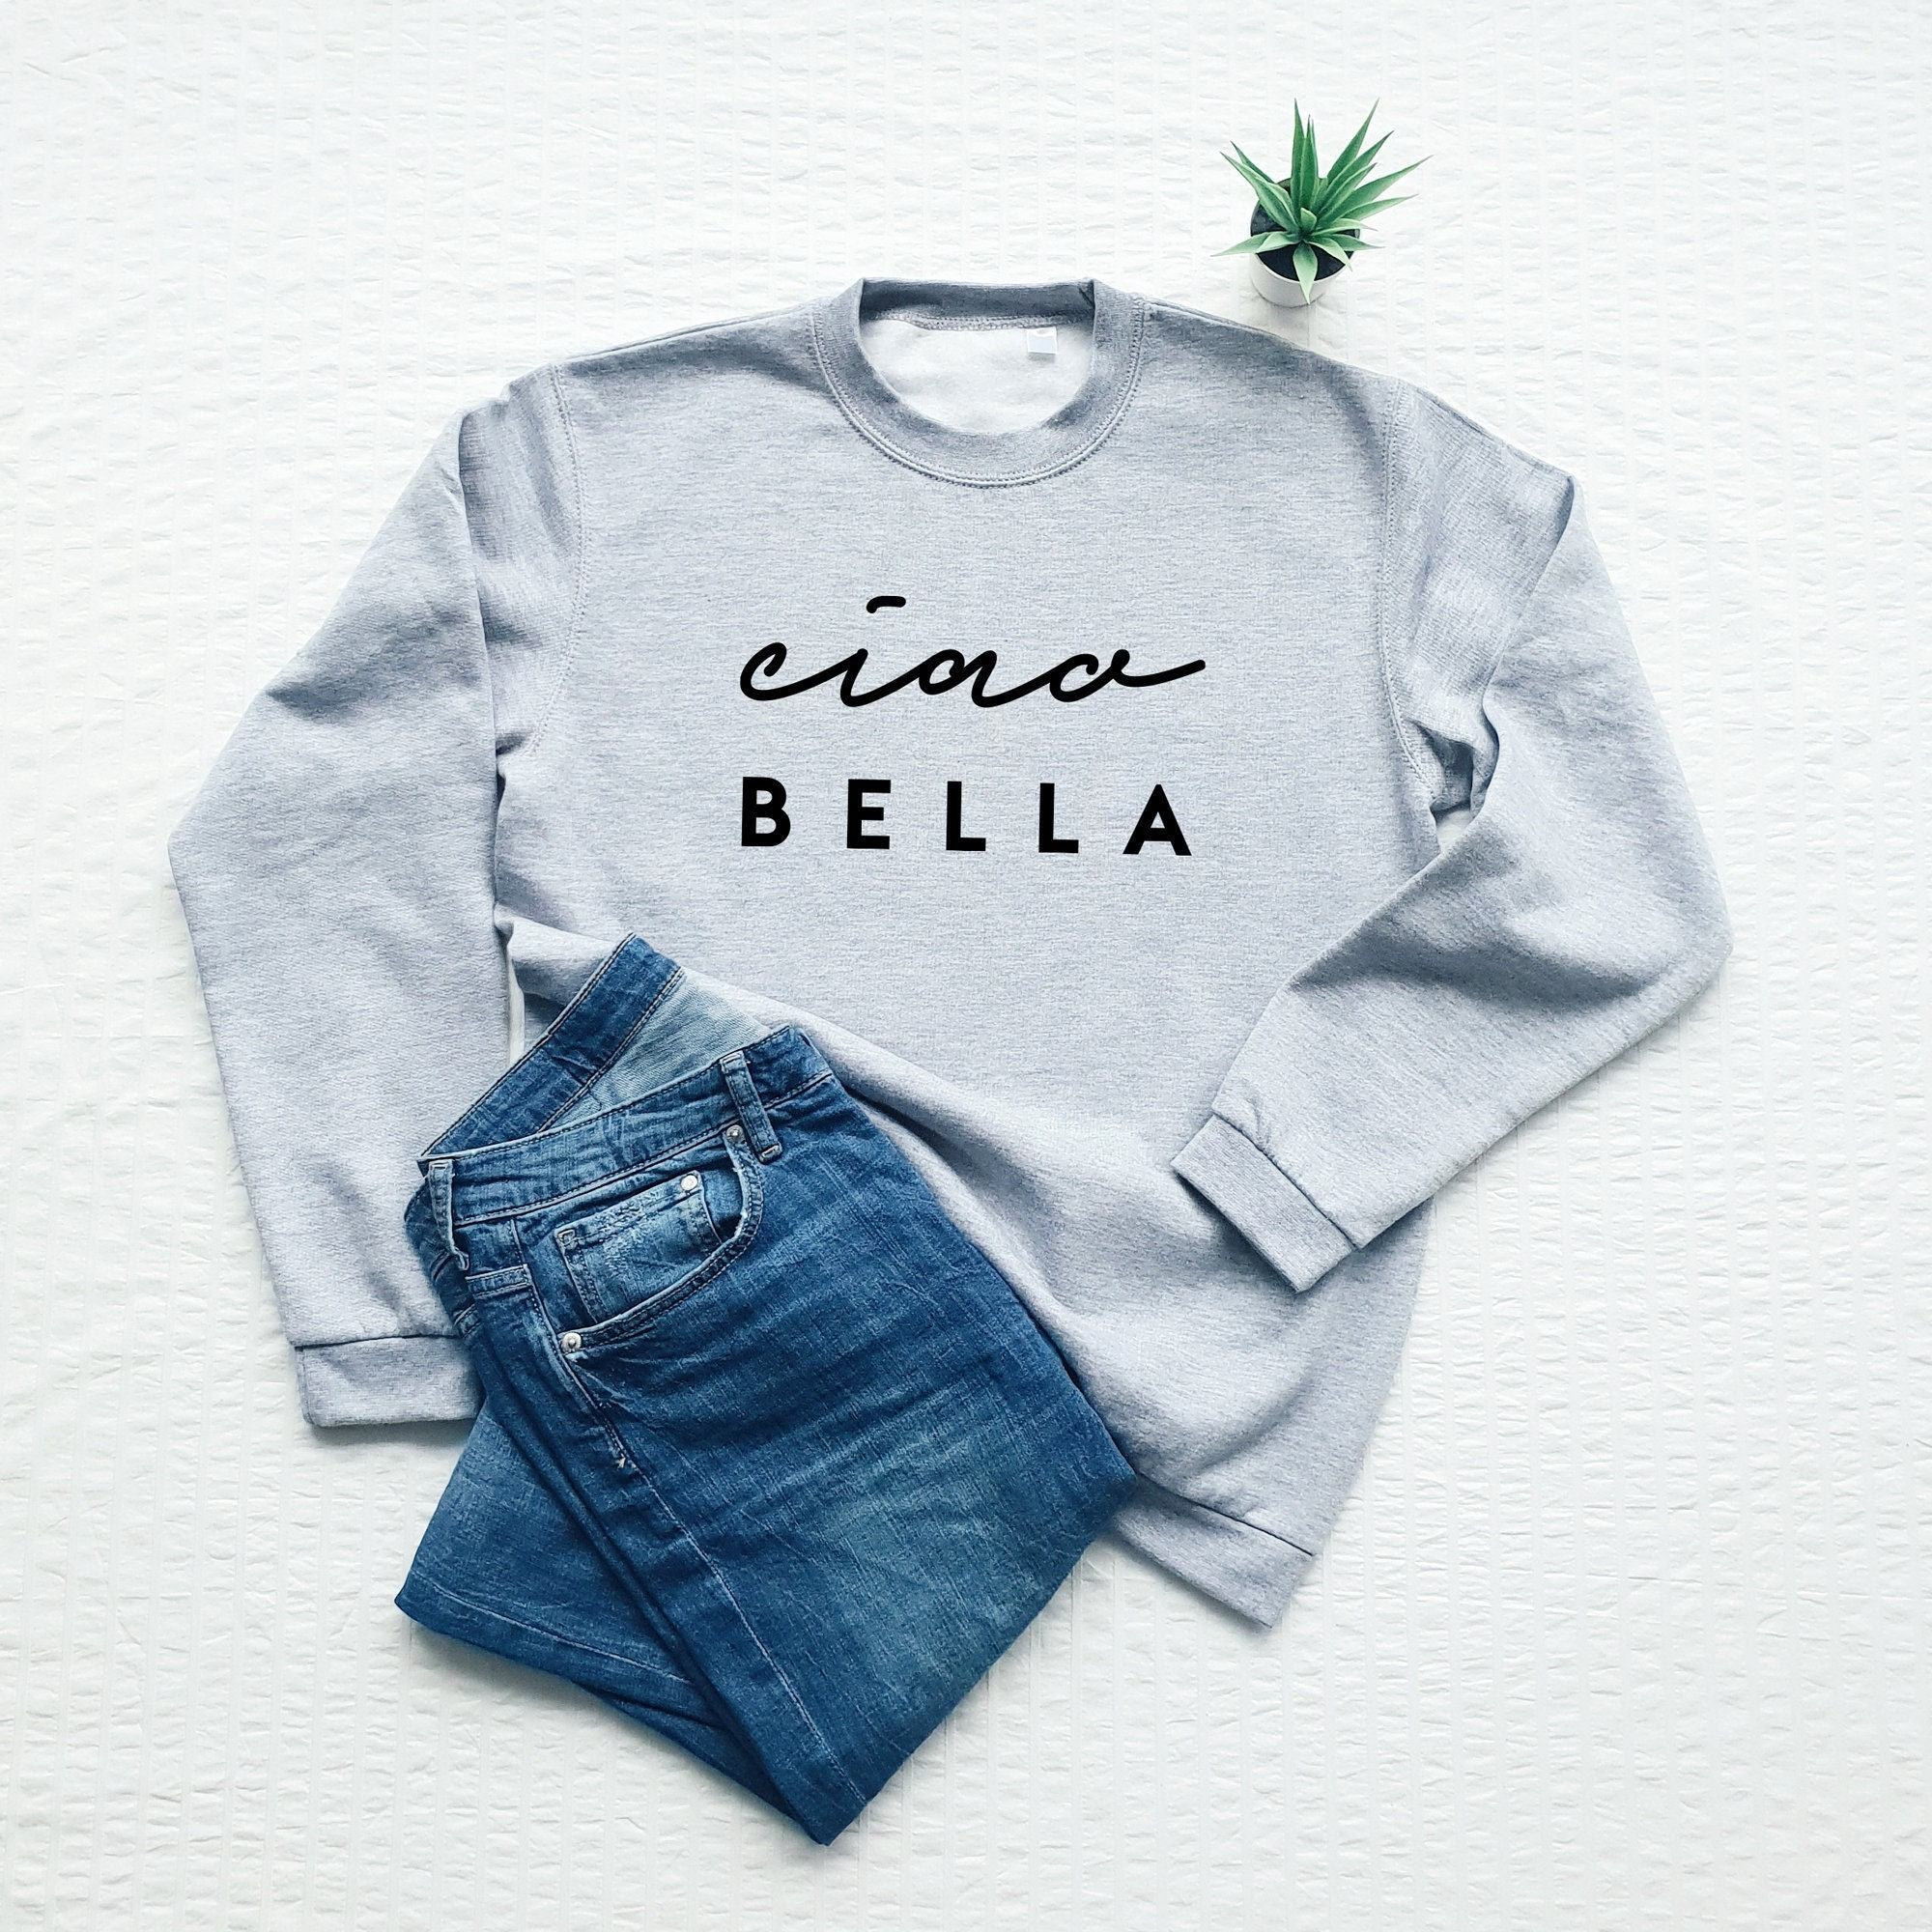 Ciao Bella Sweatshirt, Italian Sweatshirt, Italy Gift, Ciao Sweater, Italy  Lover Gift, Cute Travel Sweatshirt -  Ireland